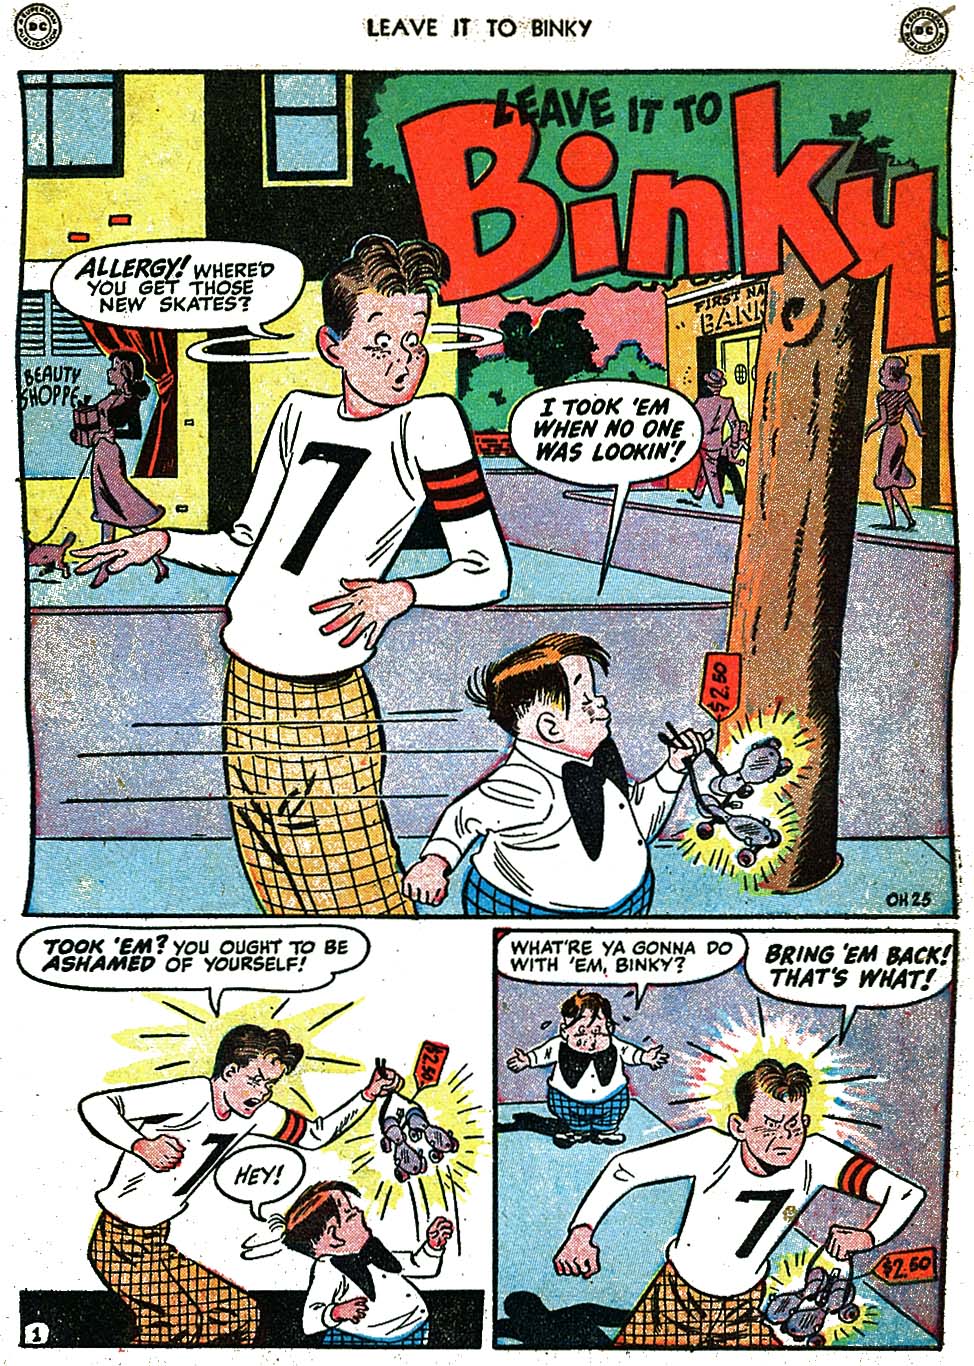 Read online Leave it to Binky comic -  Issue #5 - 3